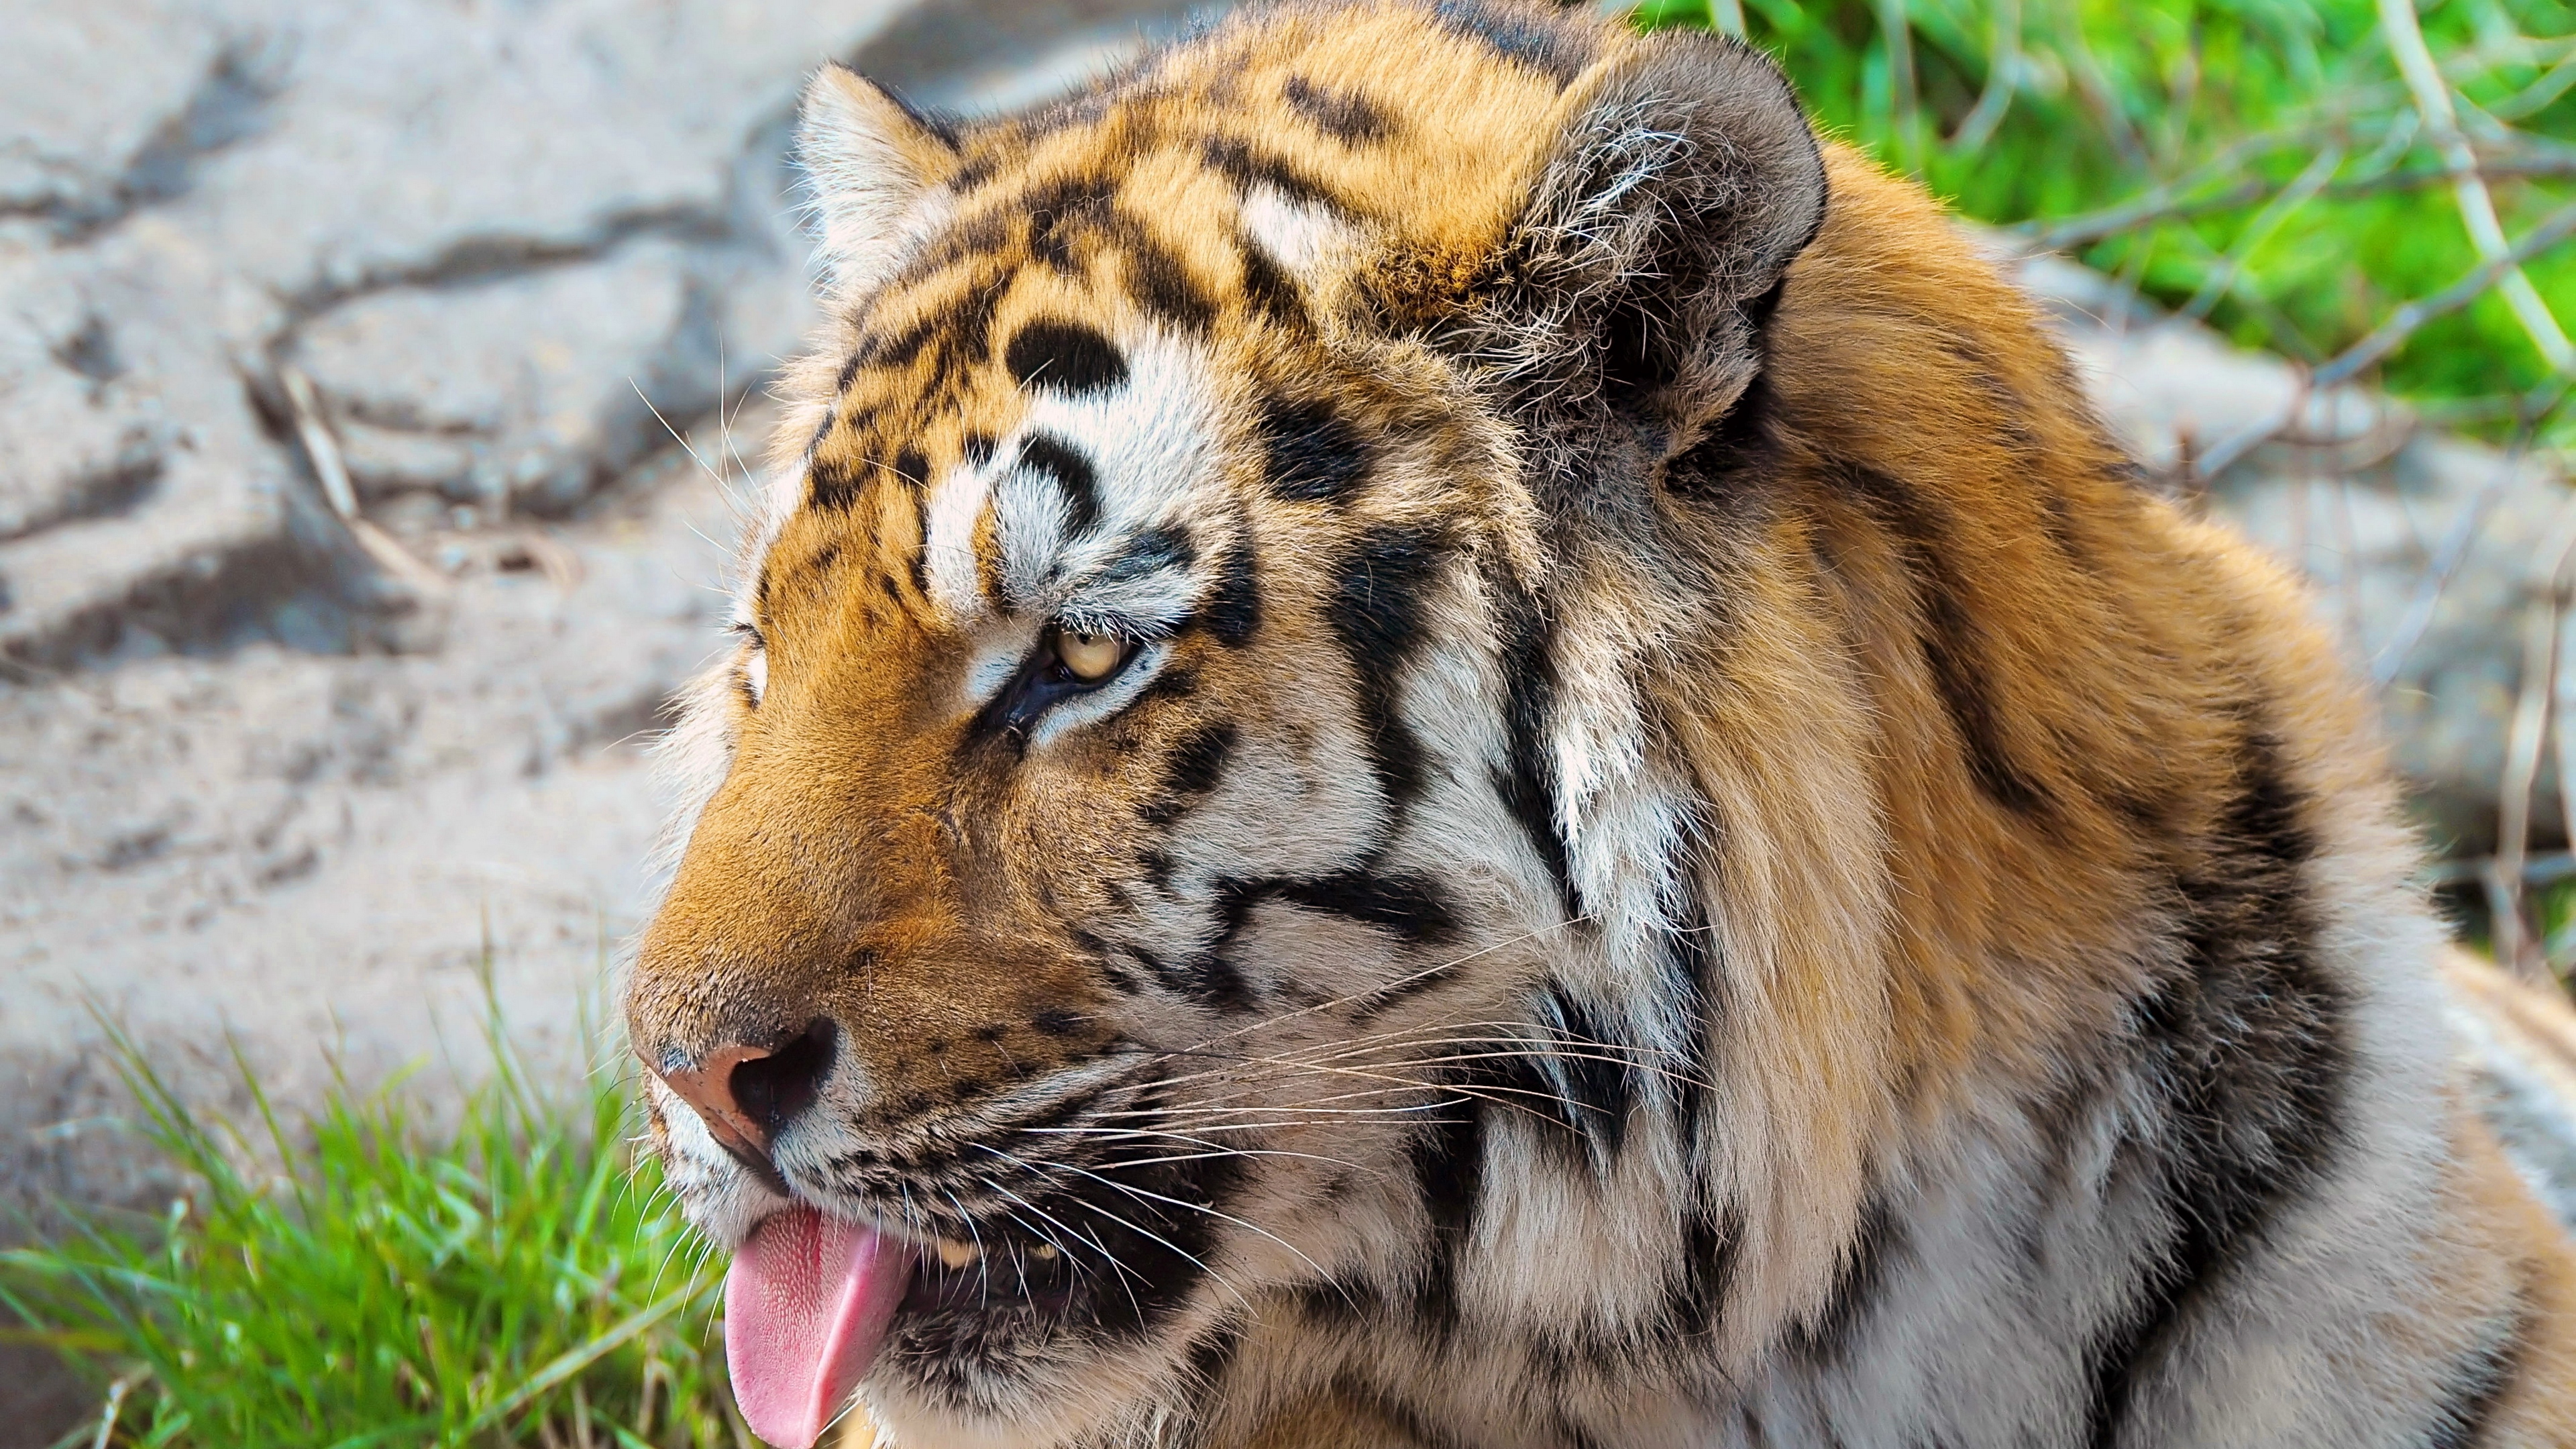 tiger face protruding tongue striped predator 4k 1542242106 - tiger, face, protruding tongue, striped, predator 4k - Tiger, protruding tongue, Face